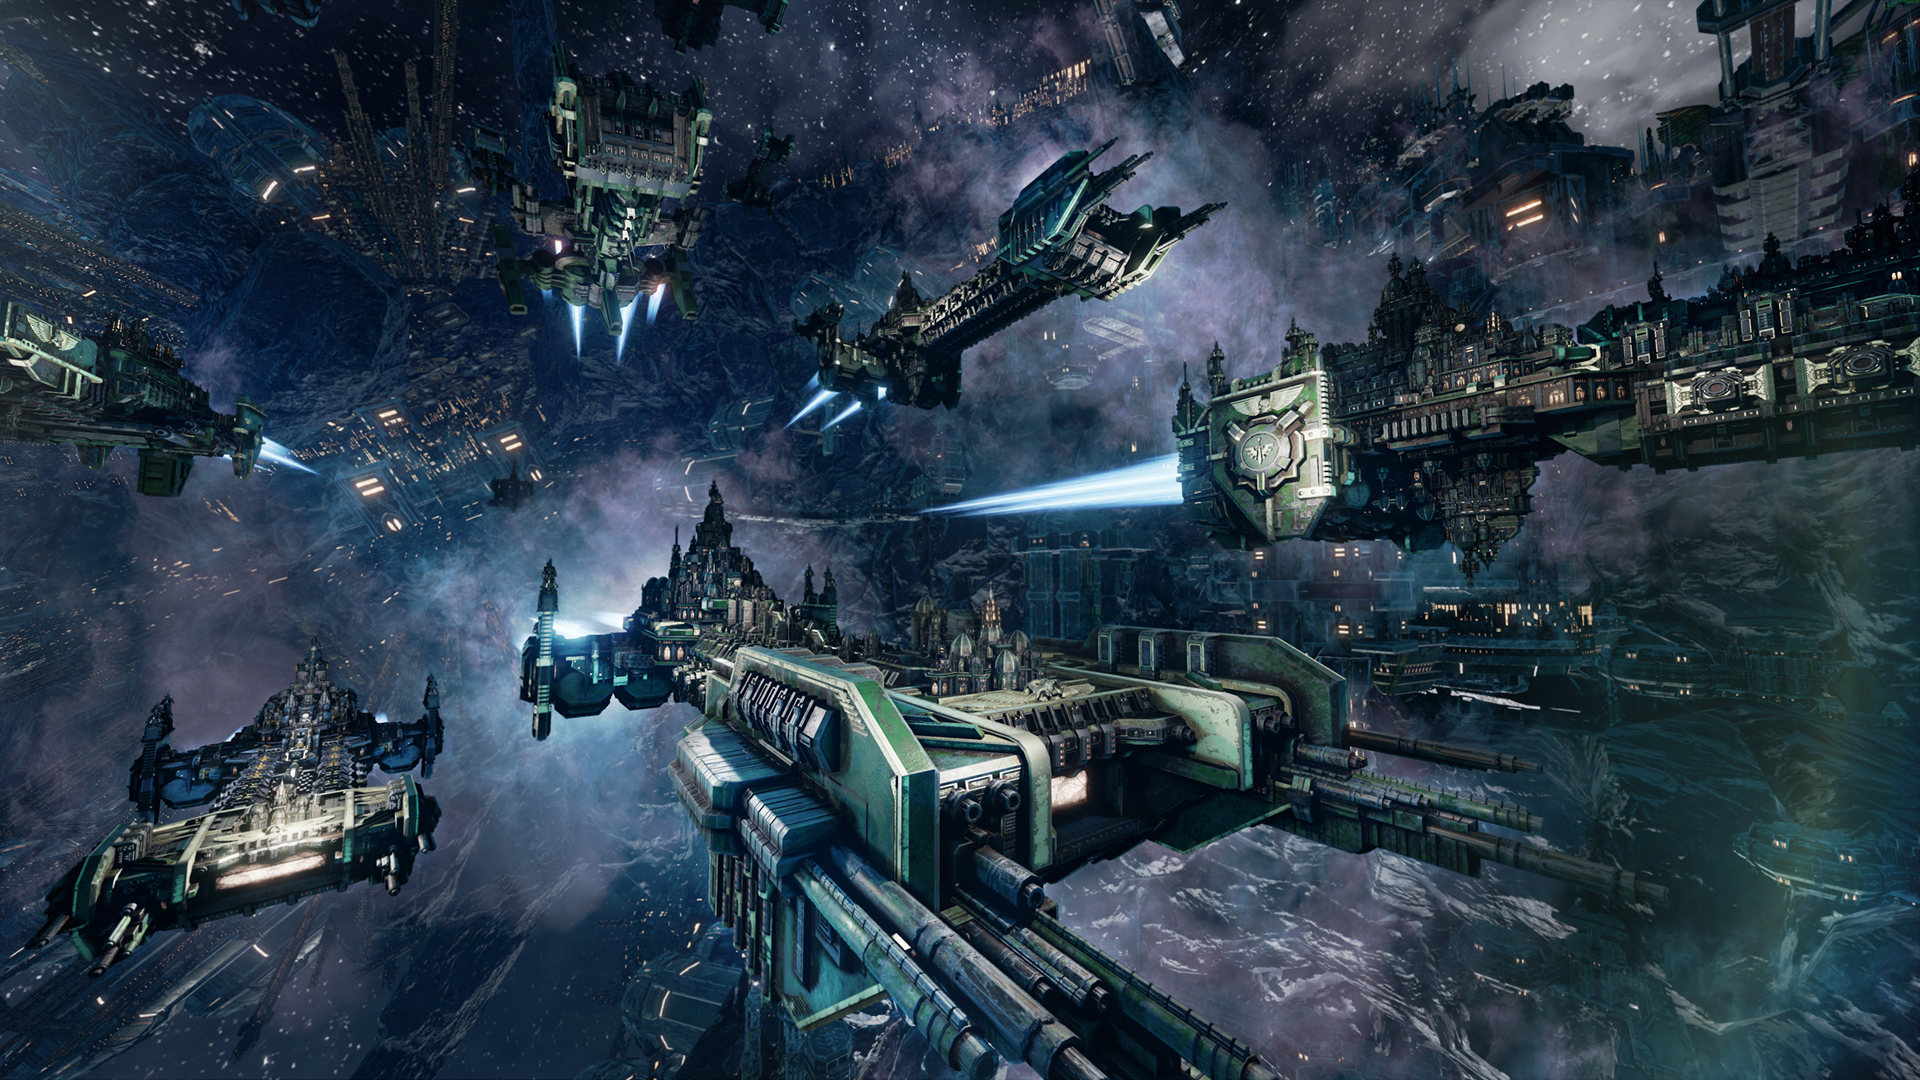 Battlefleet Gothic: Armada - Space Marines screenshot